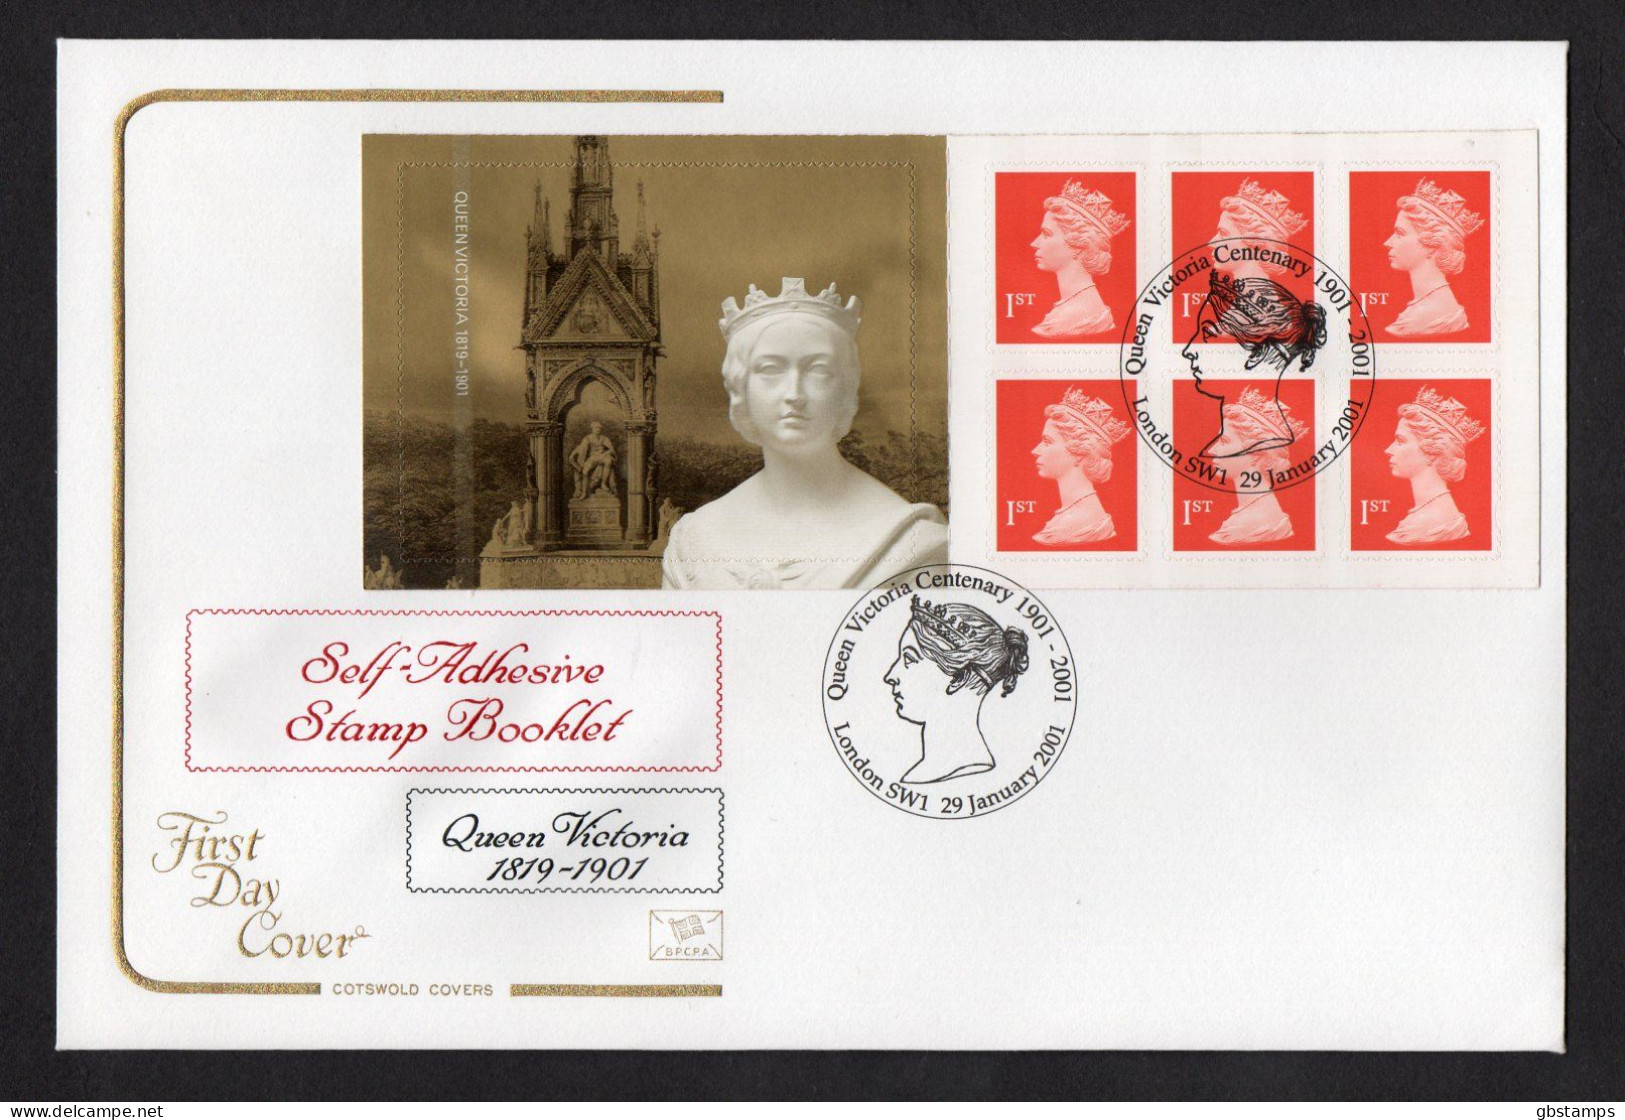 2001 Queen Victoria Centenary Self Adhesive Booklet SG MB2 Clean Cotswold FDC Post Free(UK) - 2001-10 Ediciones Decimales